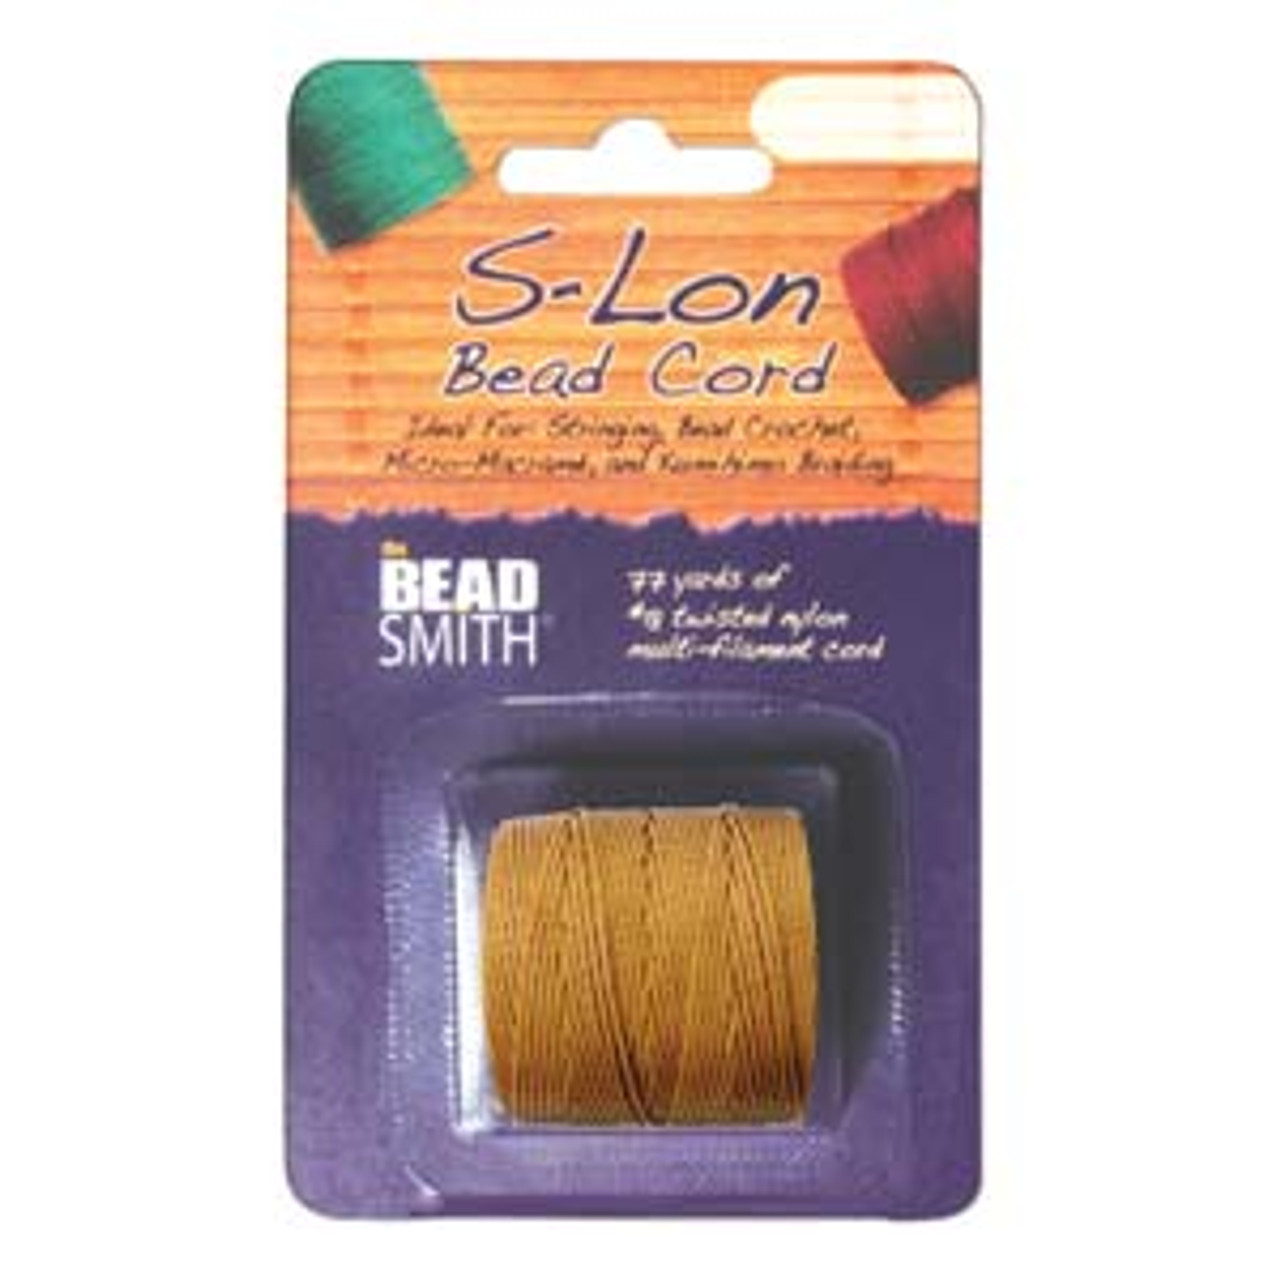 S-LON BEAD CORD TEX 210 1/CD GOLD-Approx 77 Yards